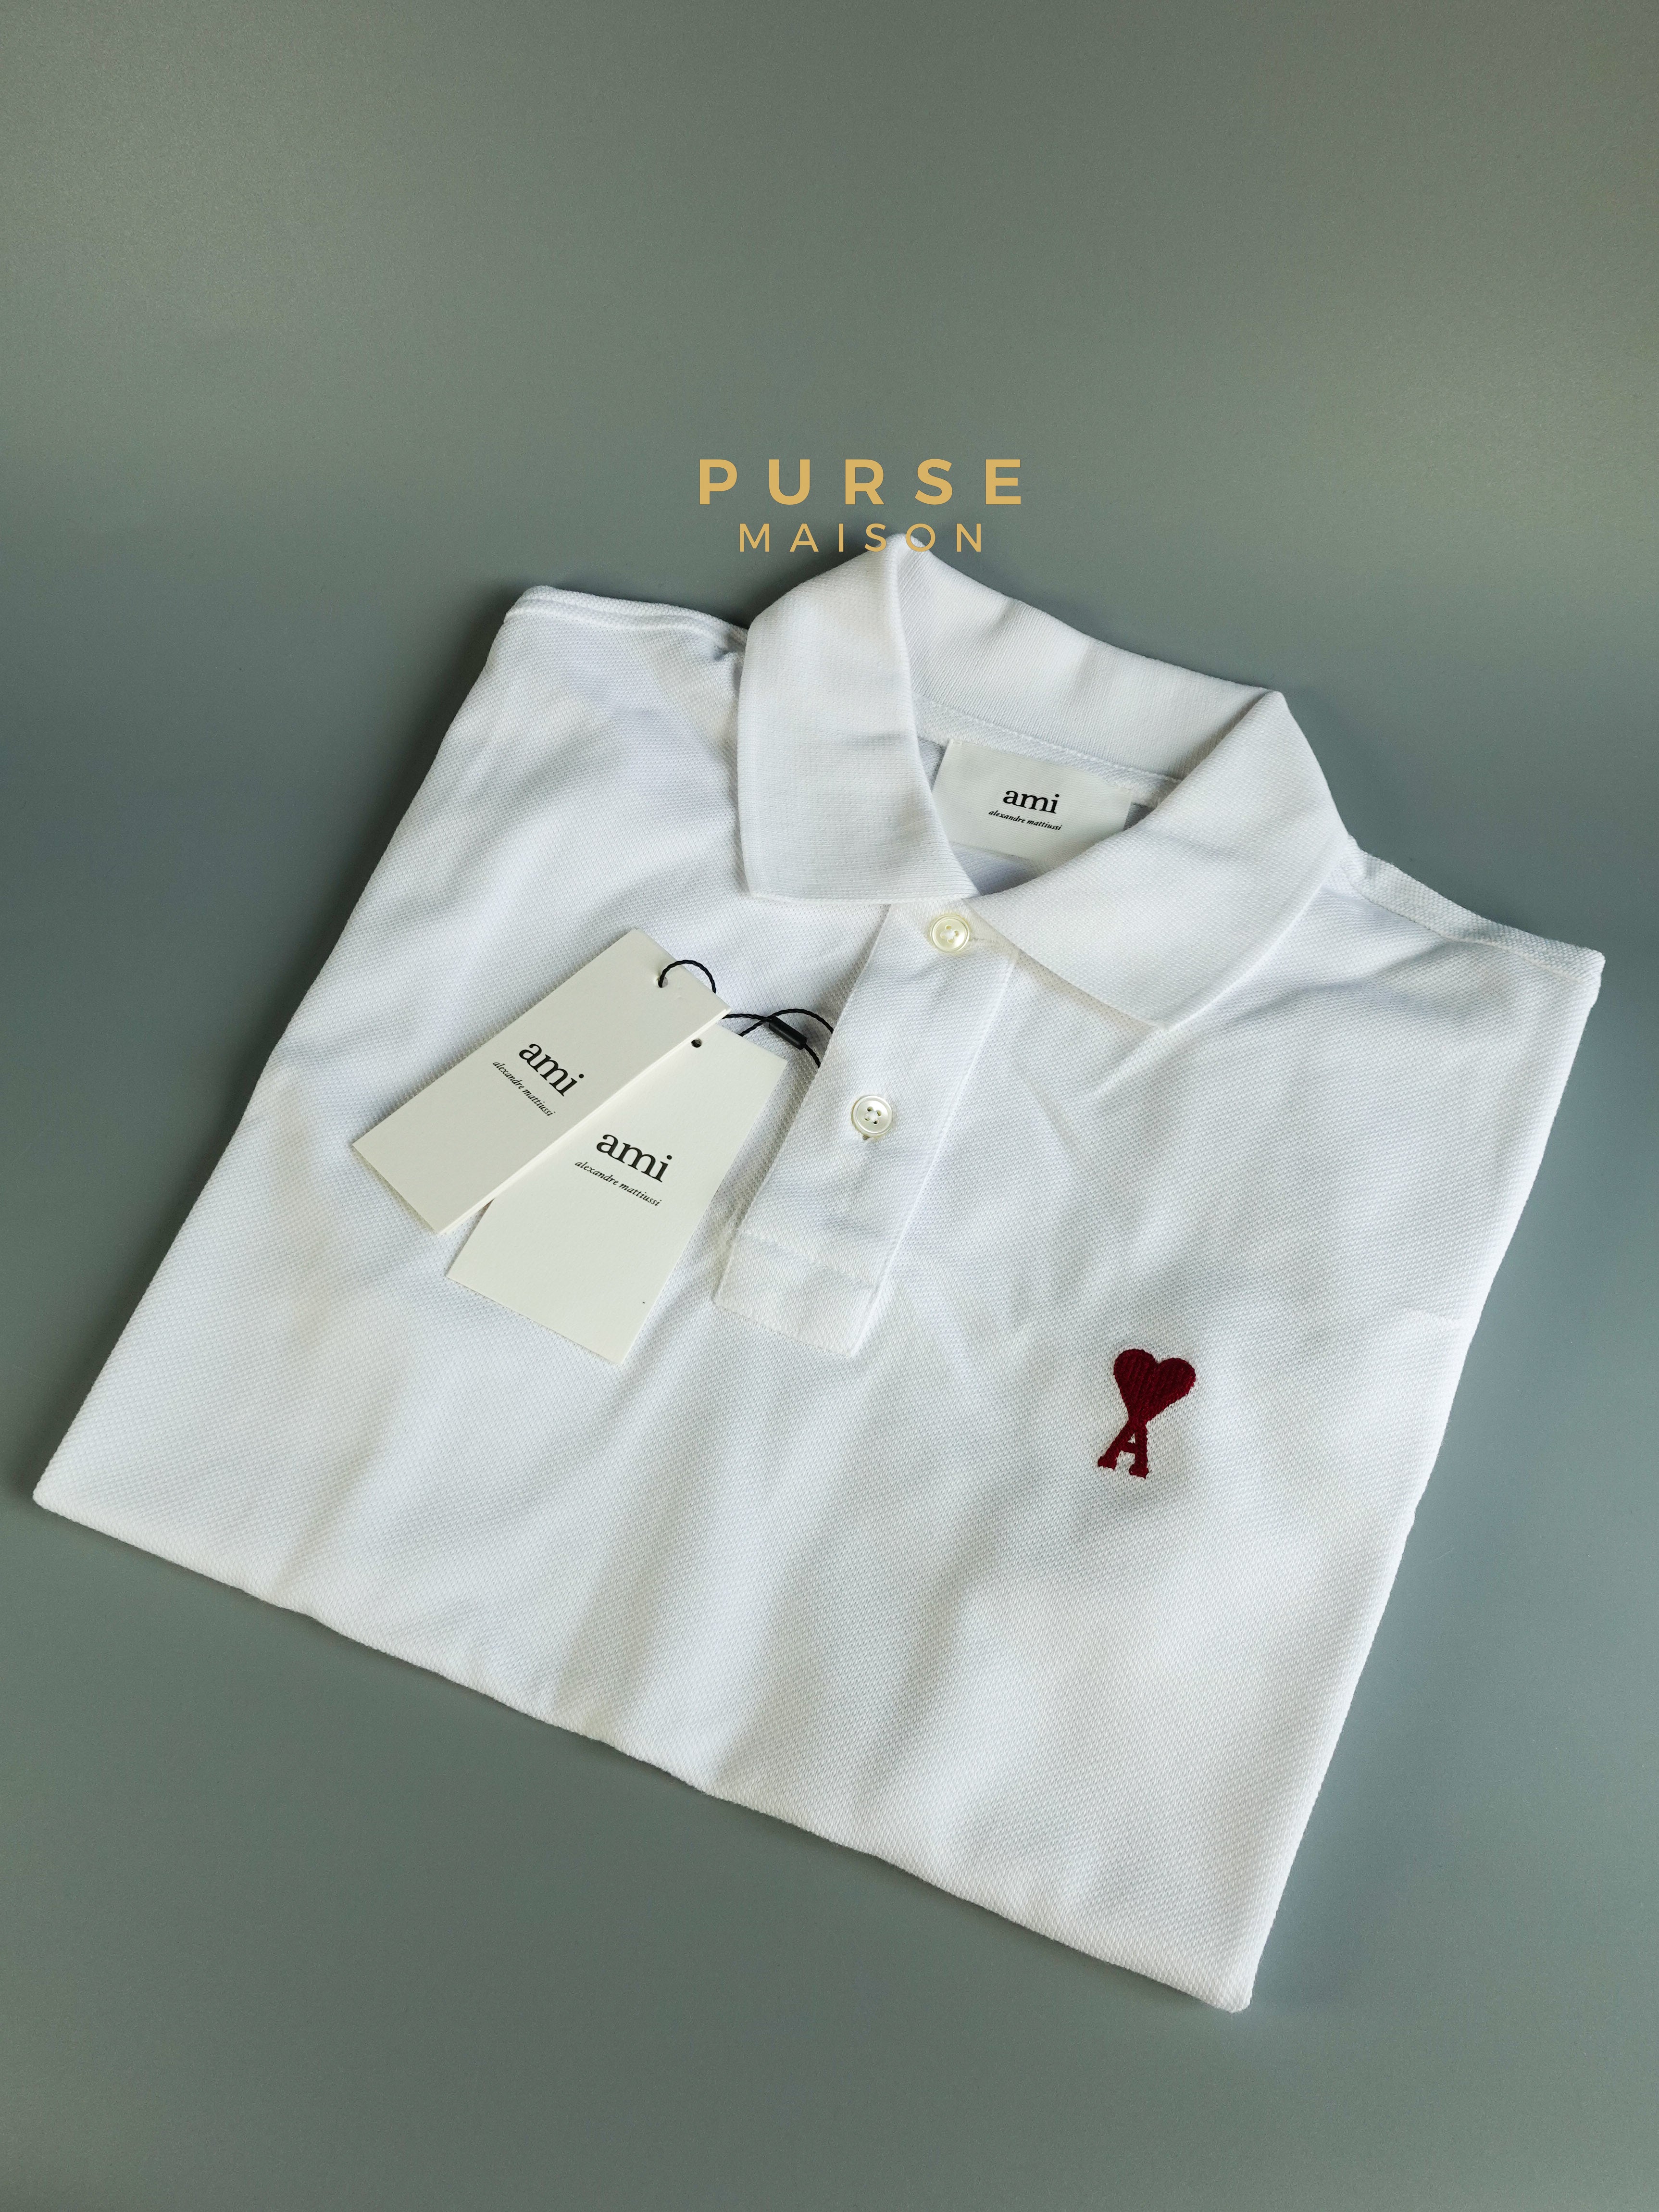 Ami Paris Polo Shirt White (Size XS) | Purse Maison Luxury Bags Shop